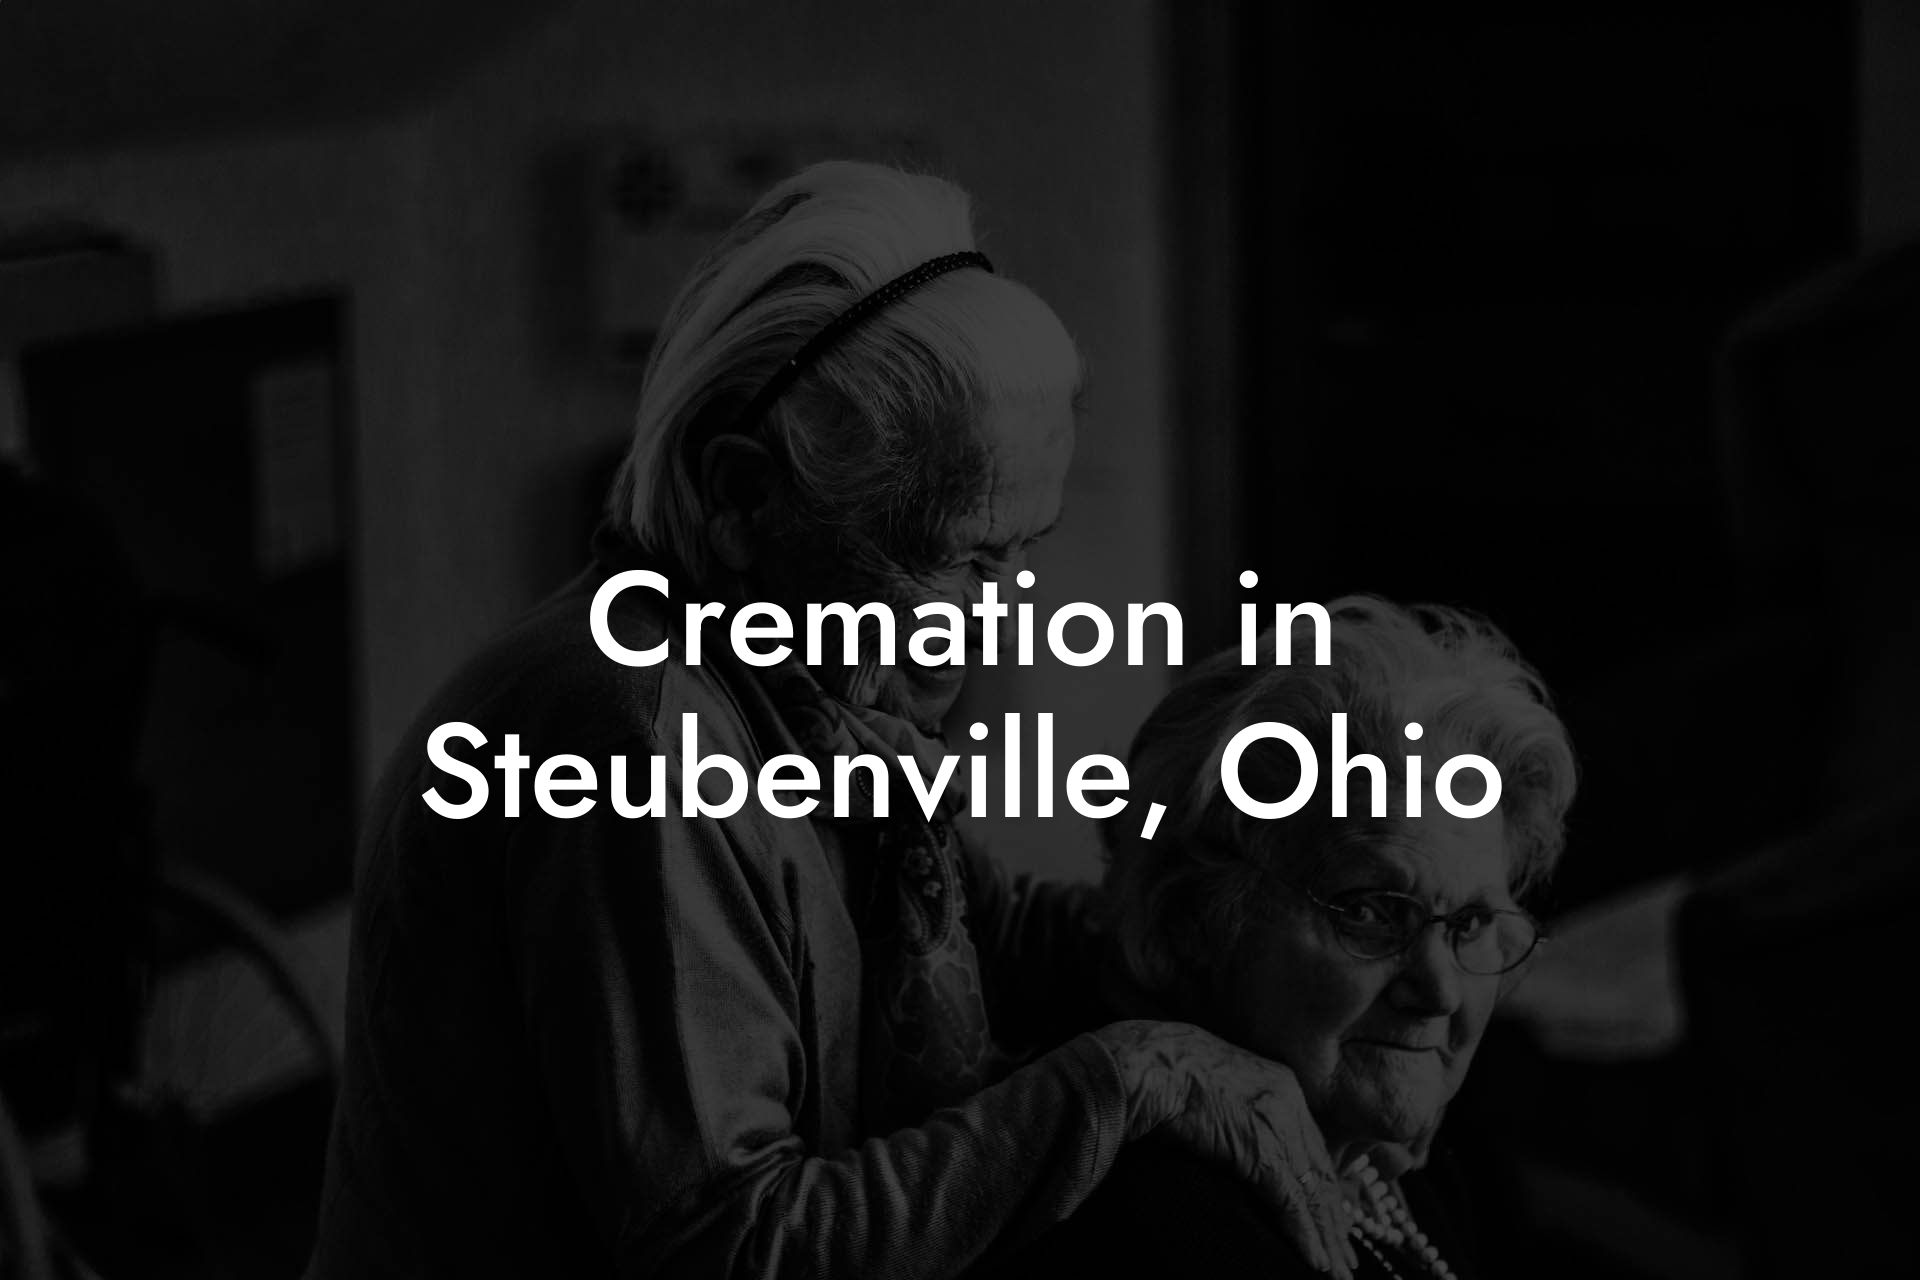 Cremation in Steubenville, Ohio